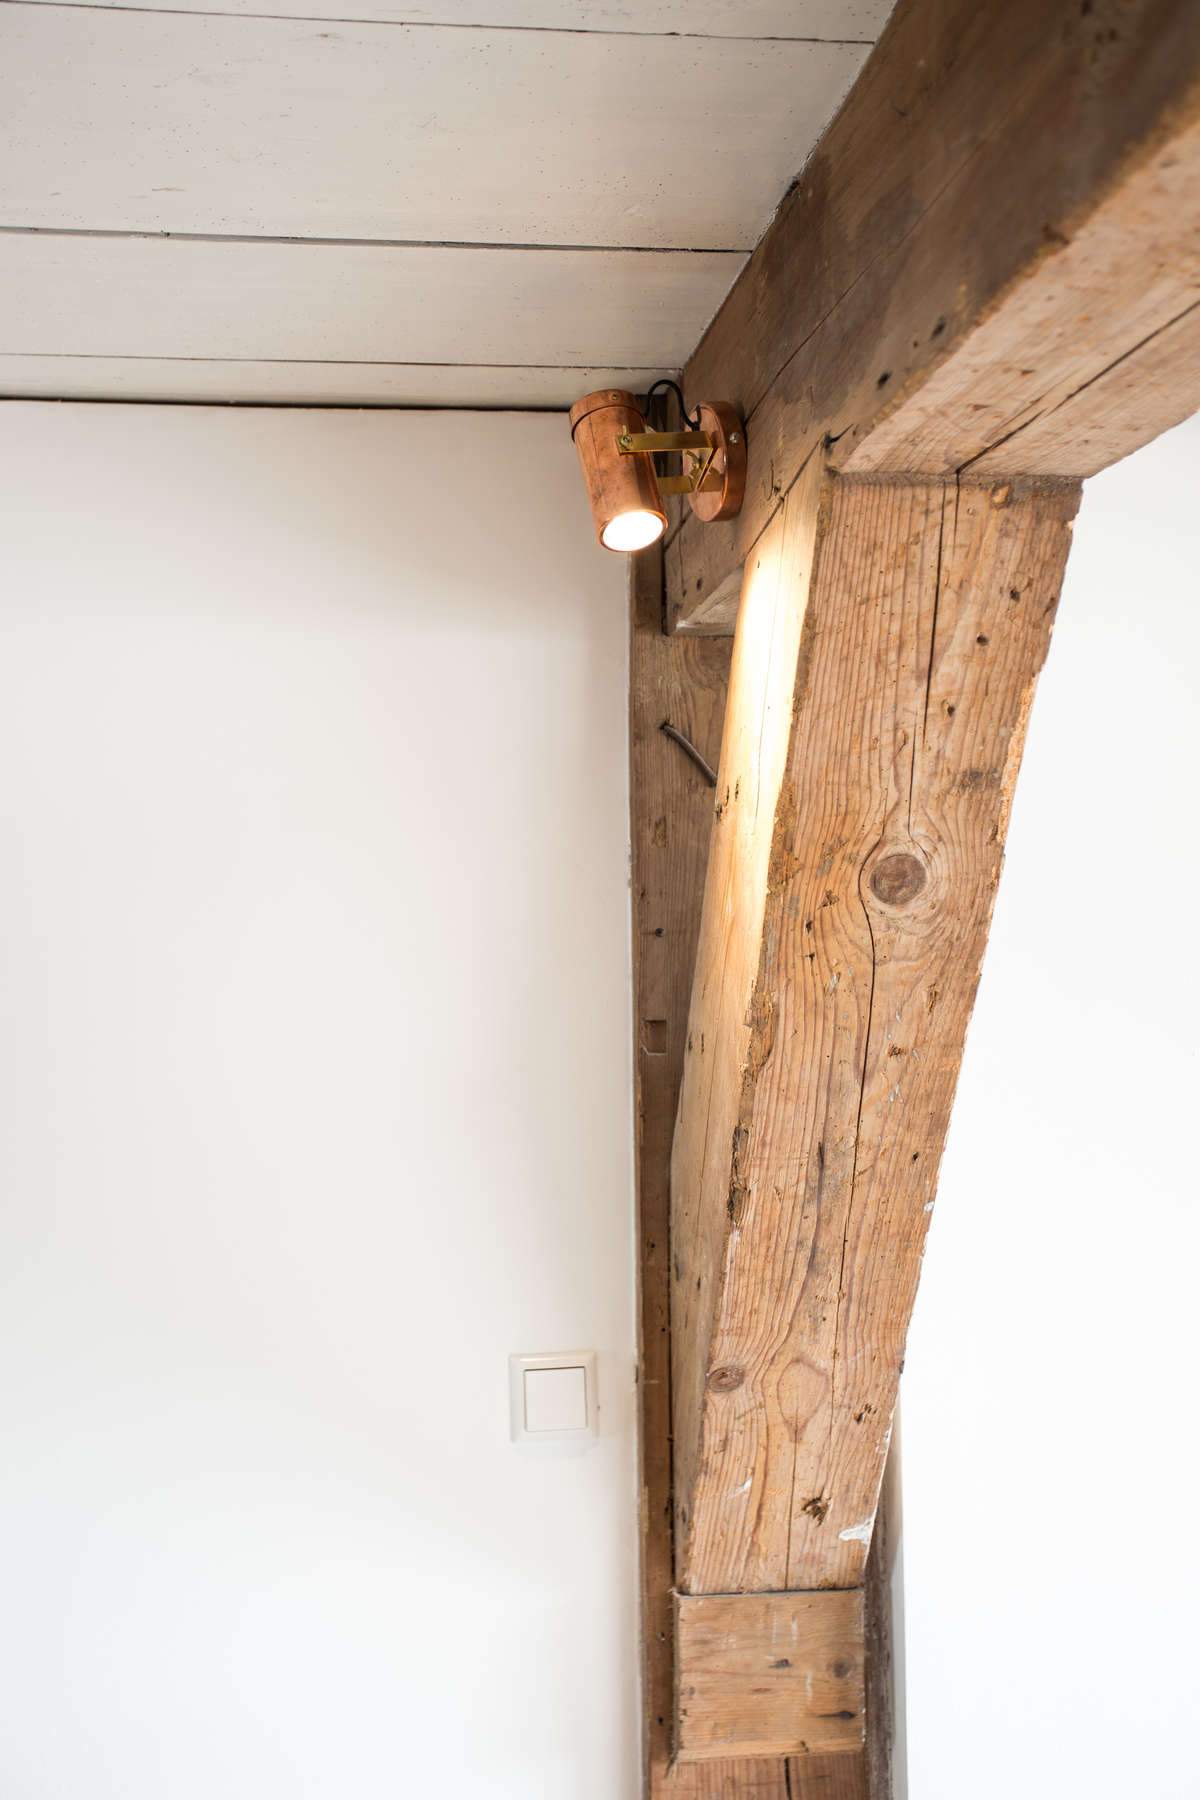 Ceiling lamp SCOPE-1 copper, Dutchbone, Eye on Design